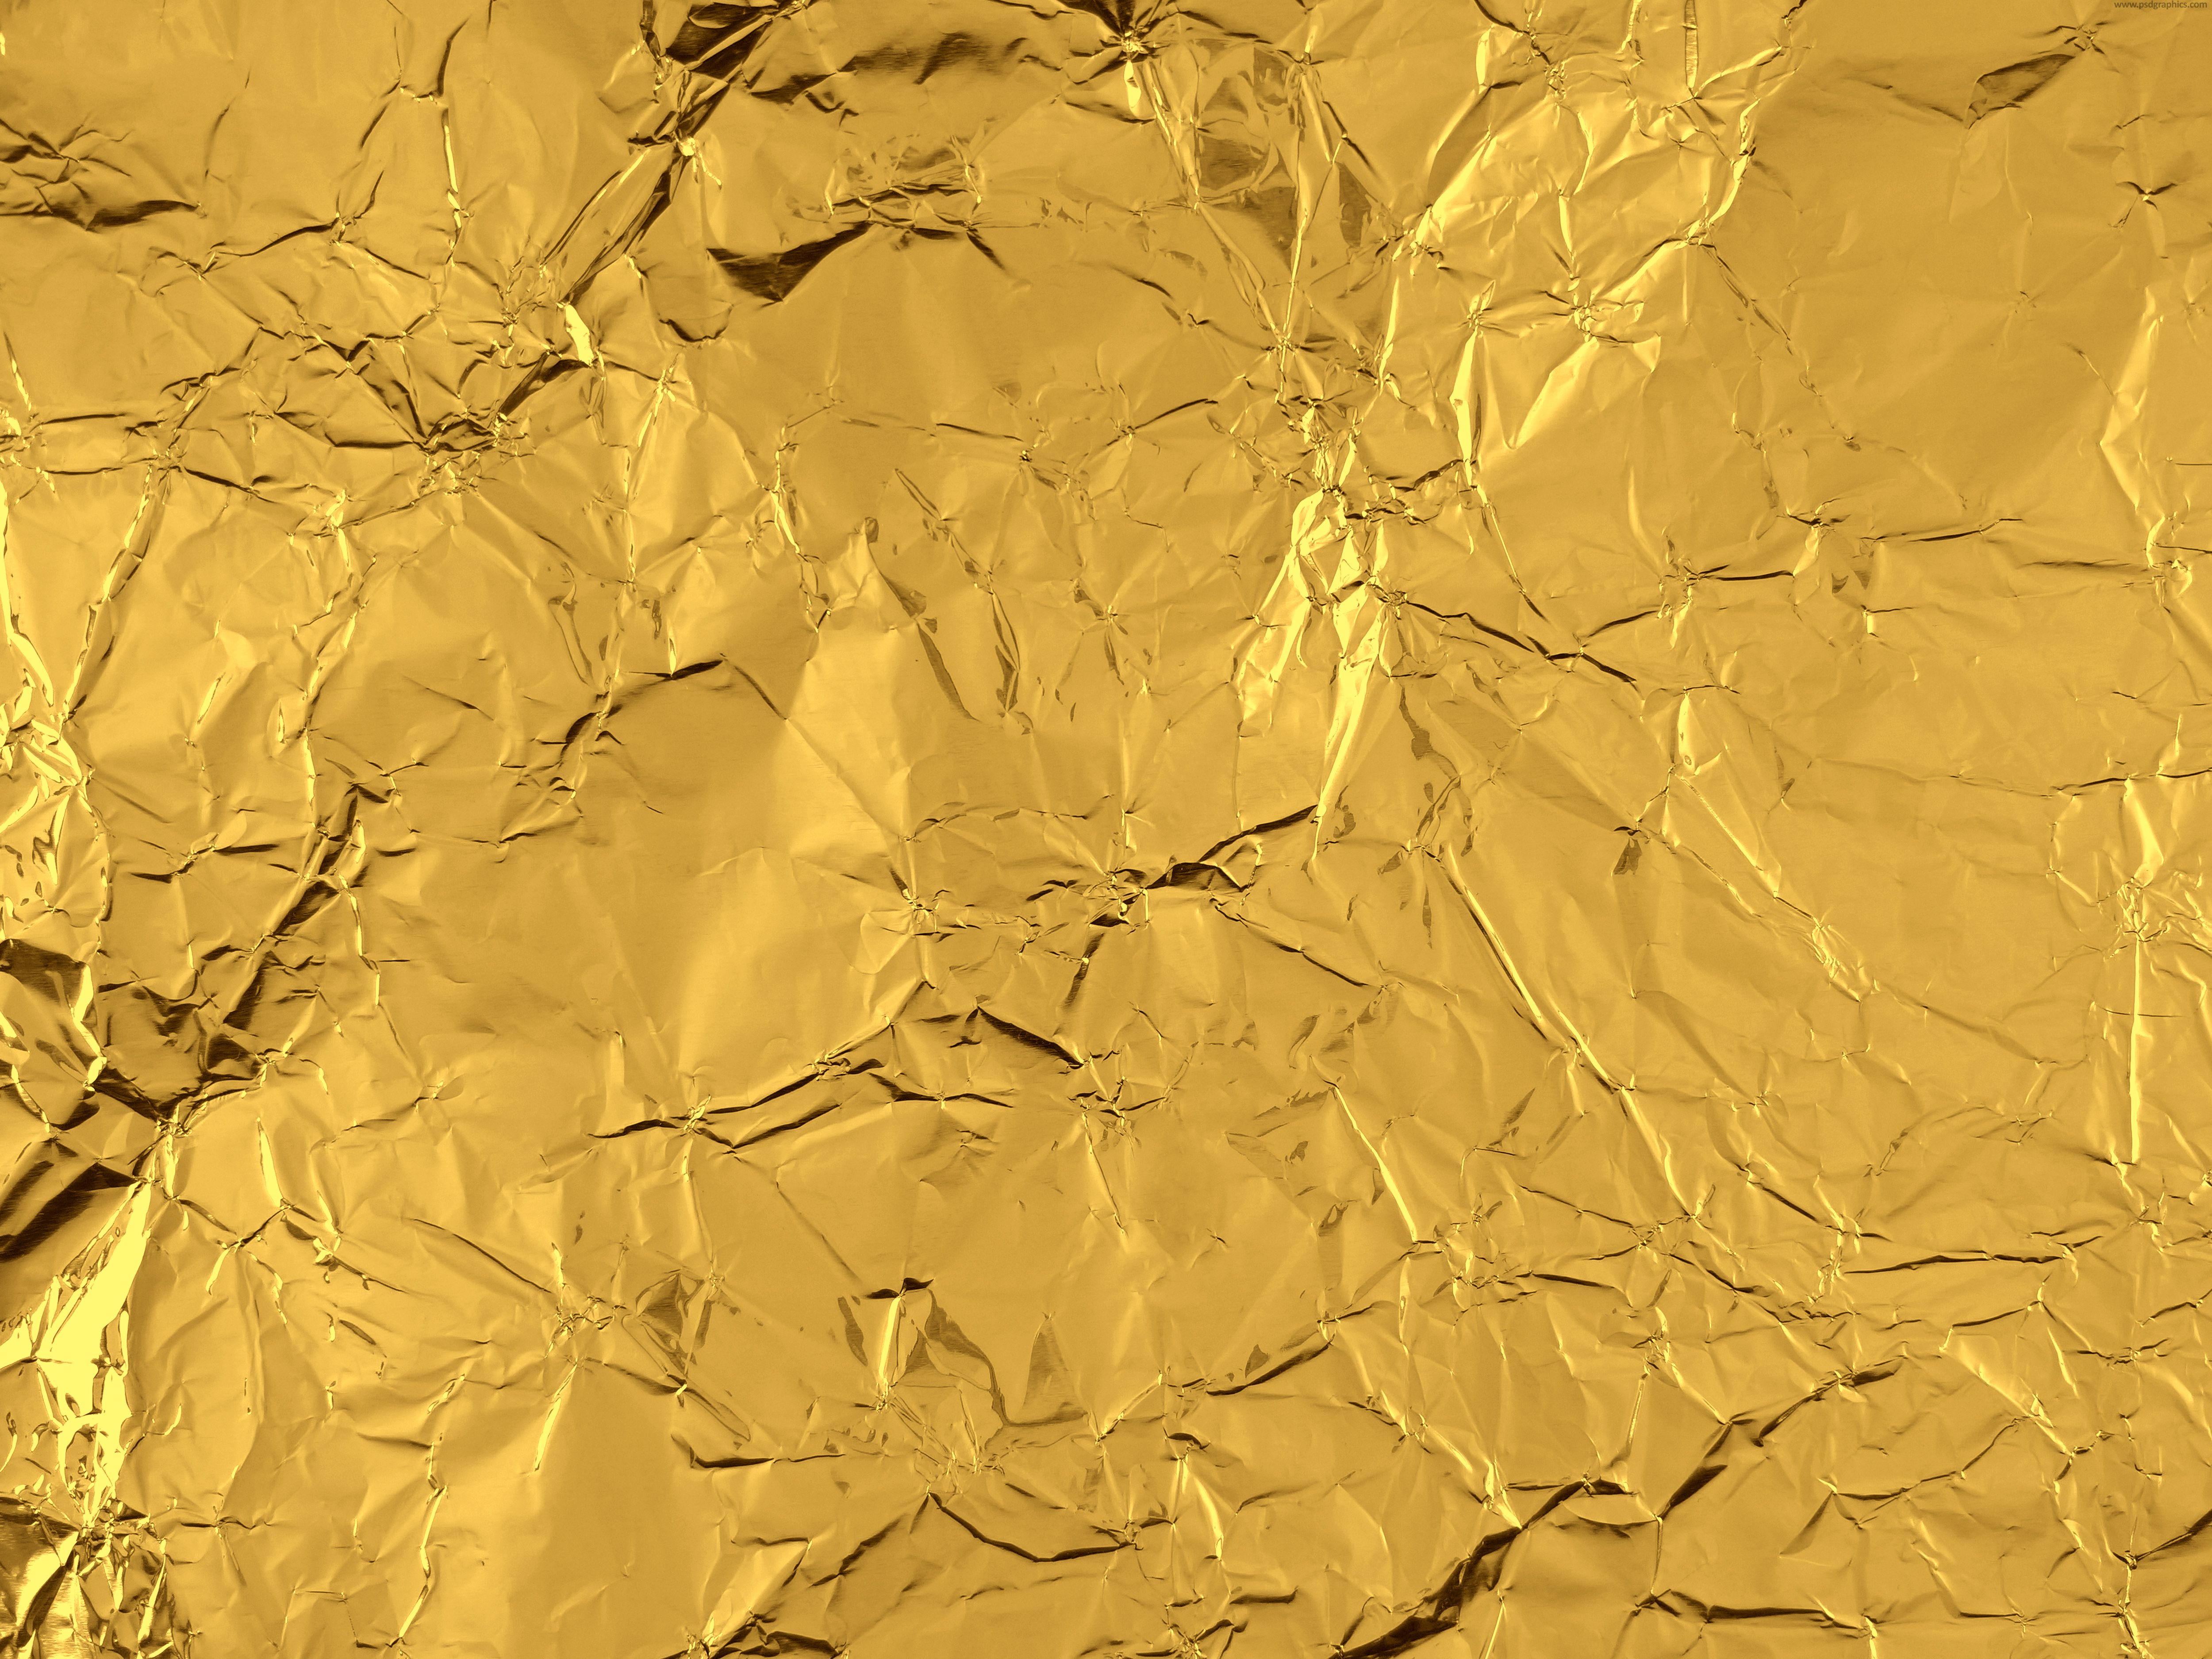 Gold Foil Texture 4k Ultra HD Wallpaper. Background Image